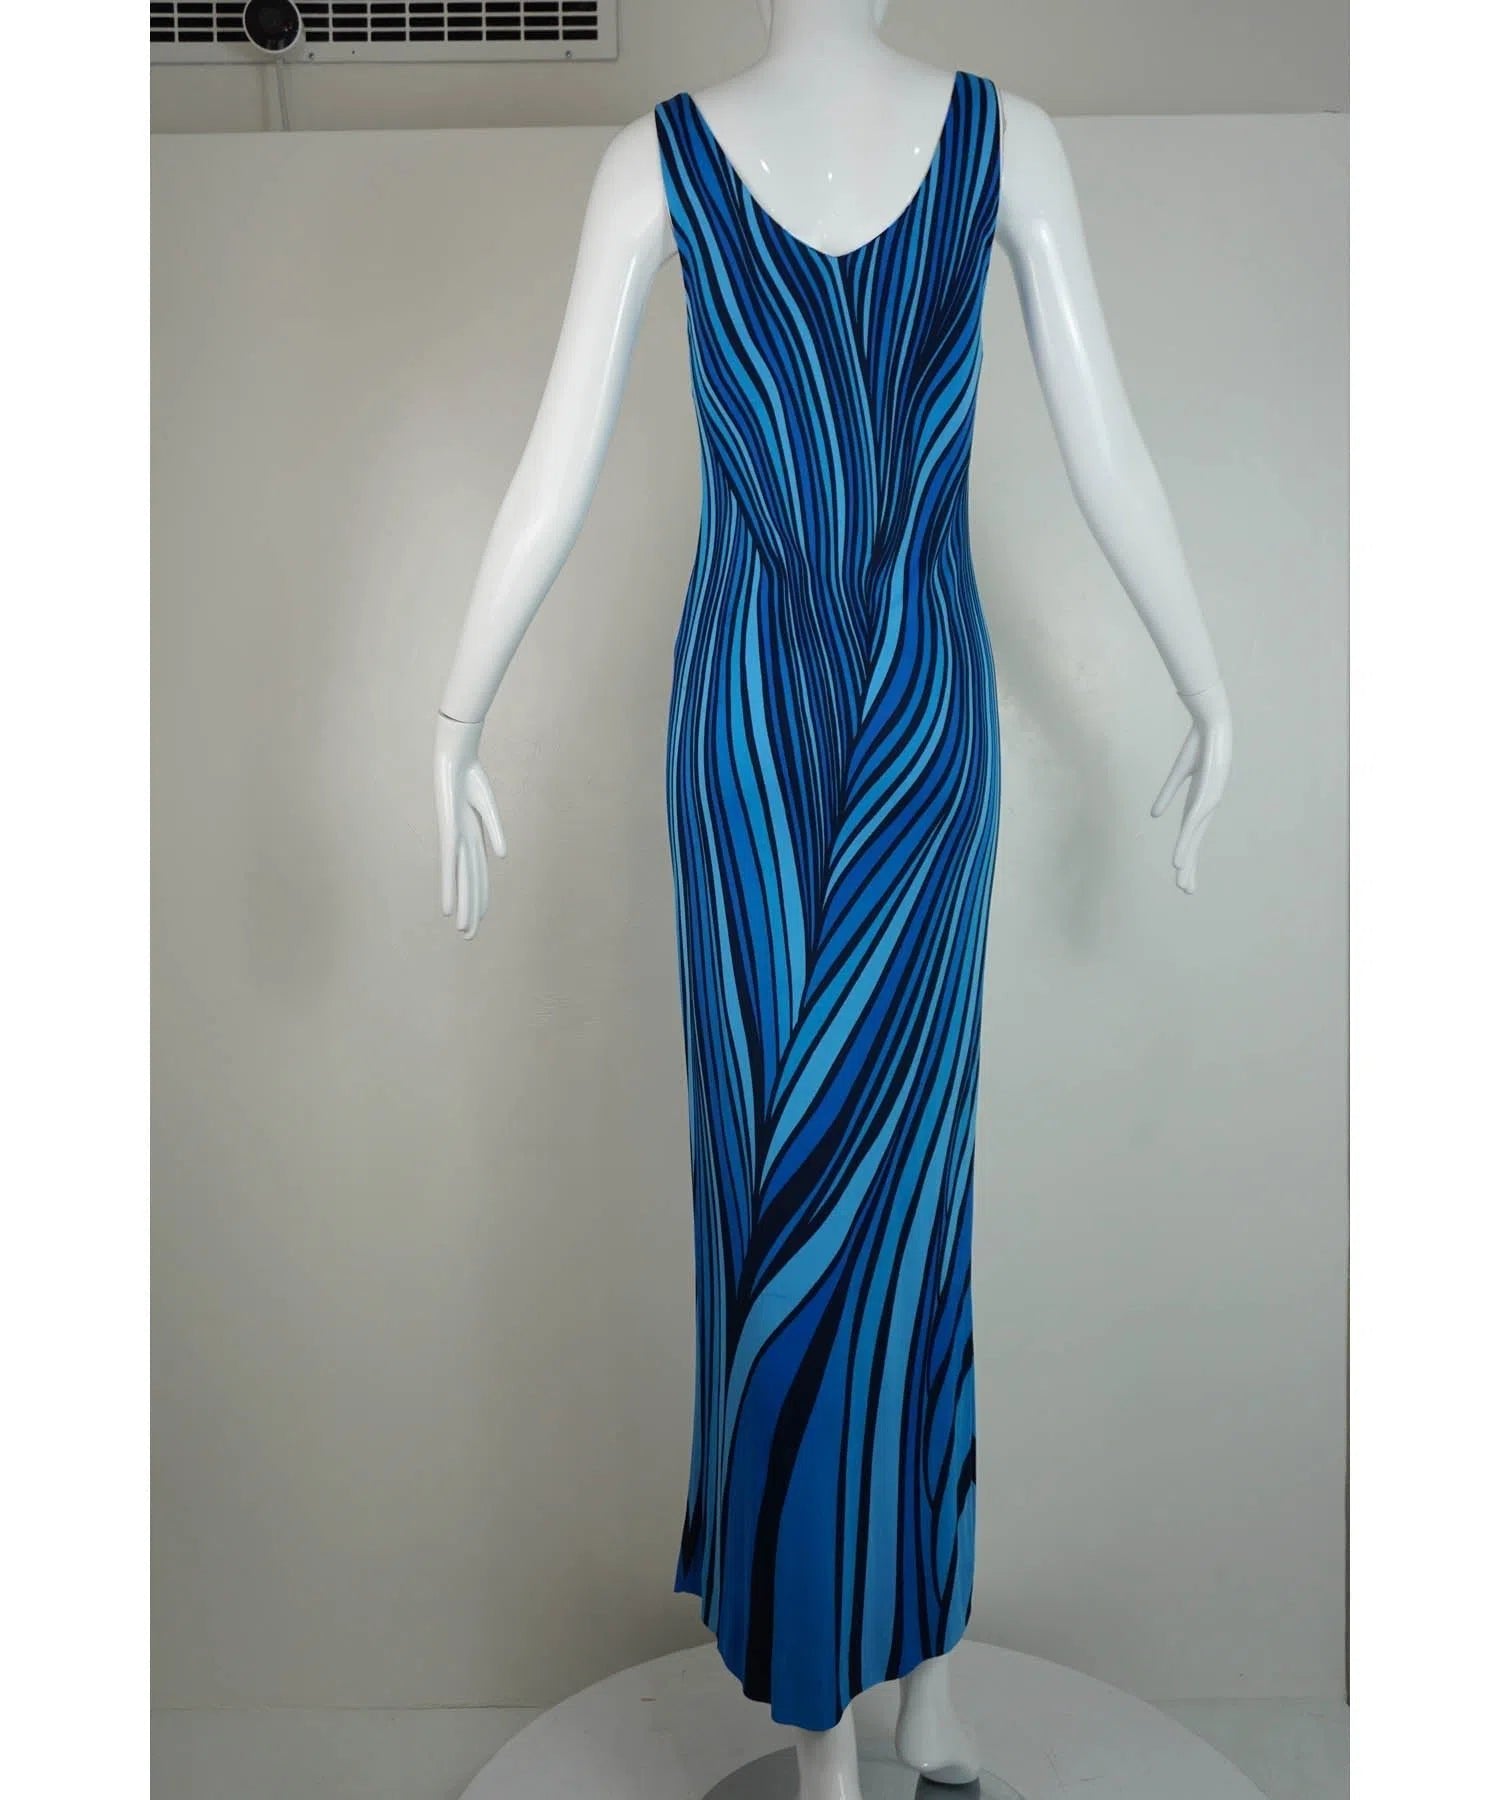 Roberta di Camerino 1970s Blue Swirl Dress